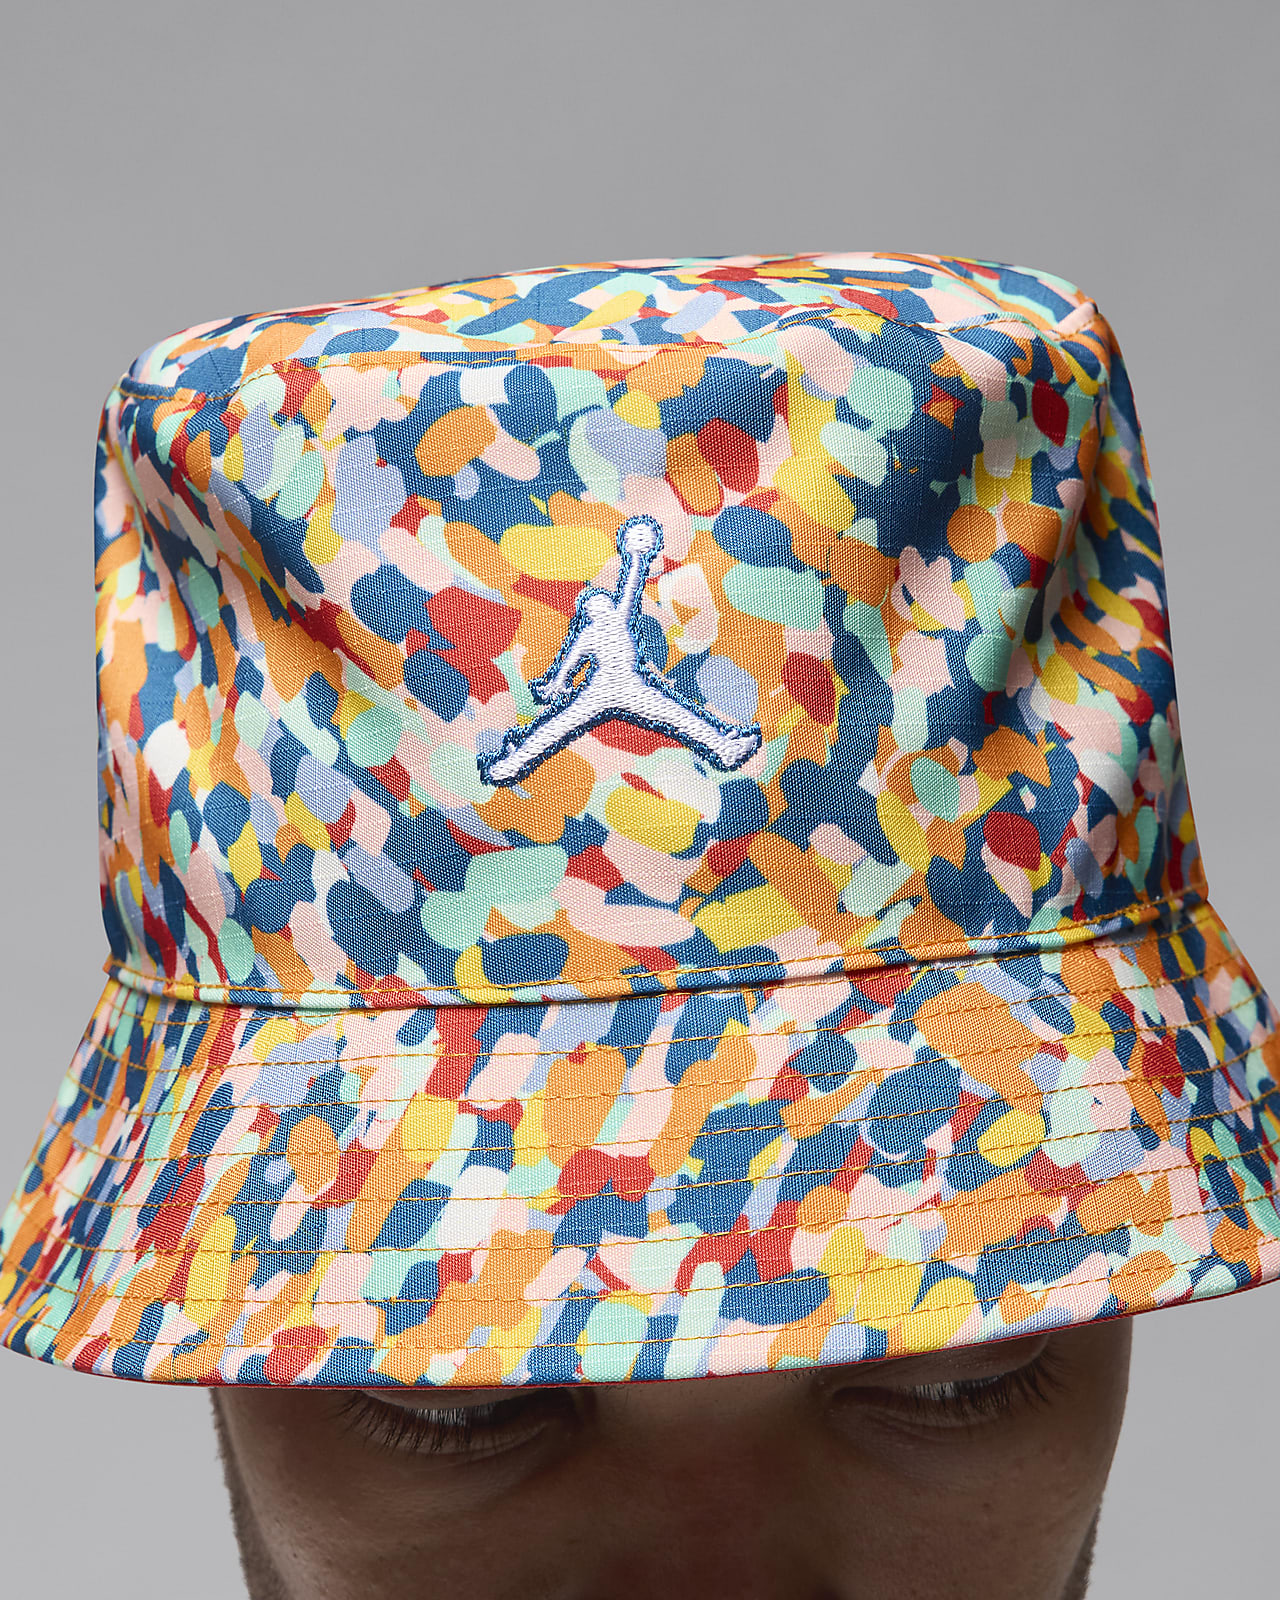 Jordan Apex Reversible Bucket Hat